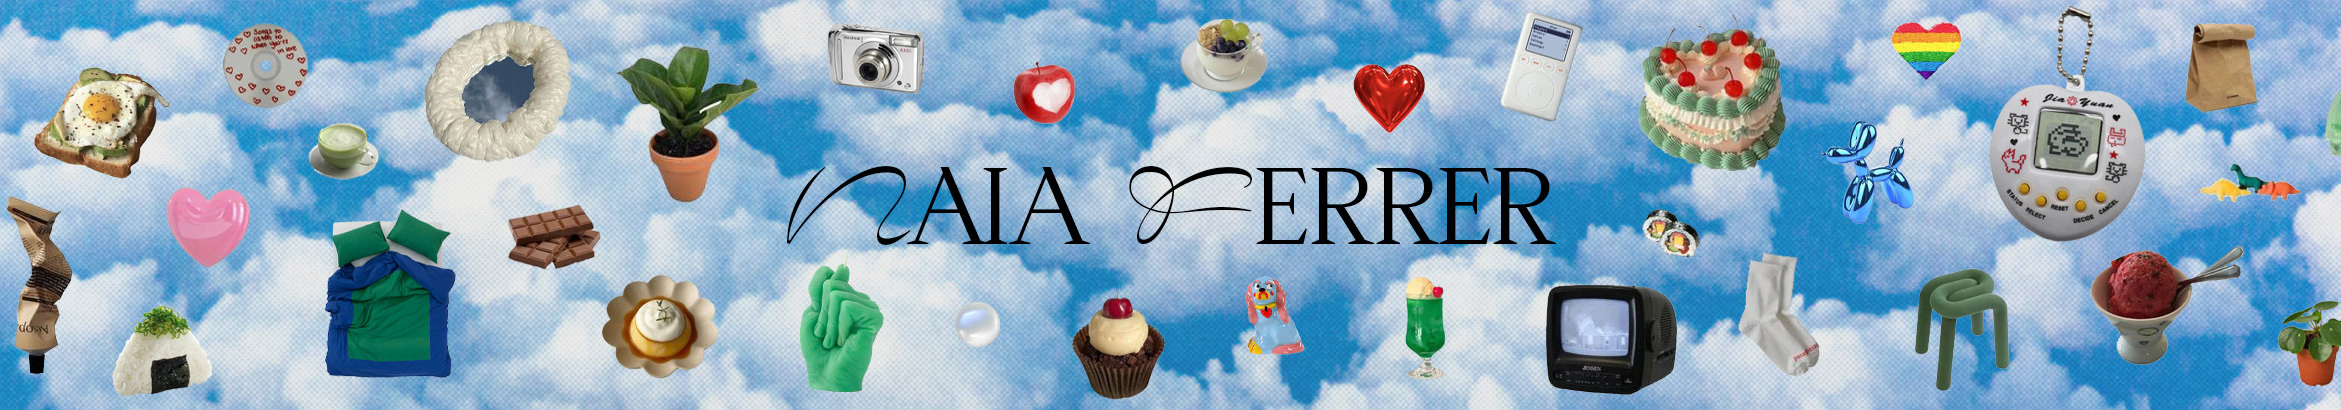 Bannière de profil de Naia Ferrer